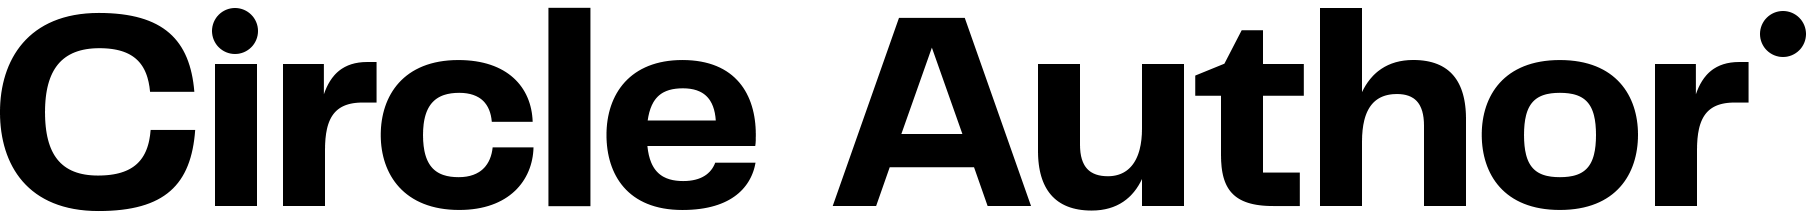 Circle Author logo